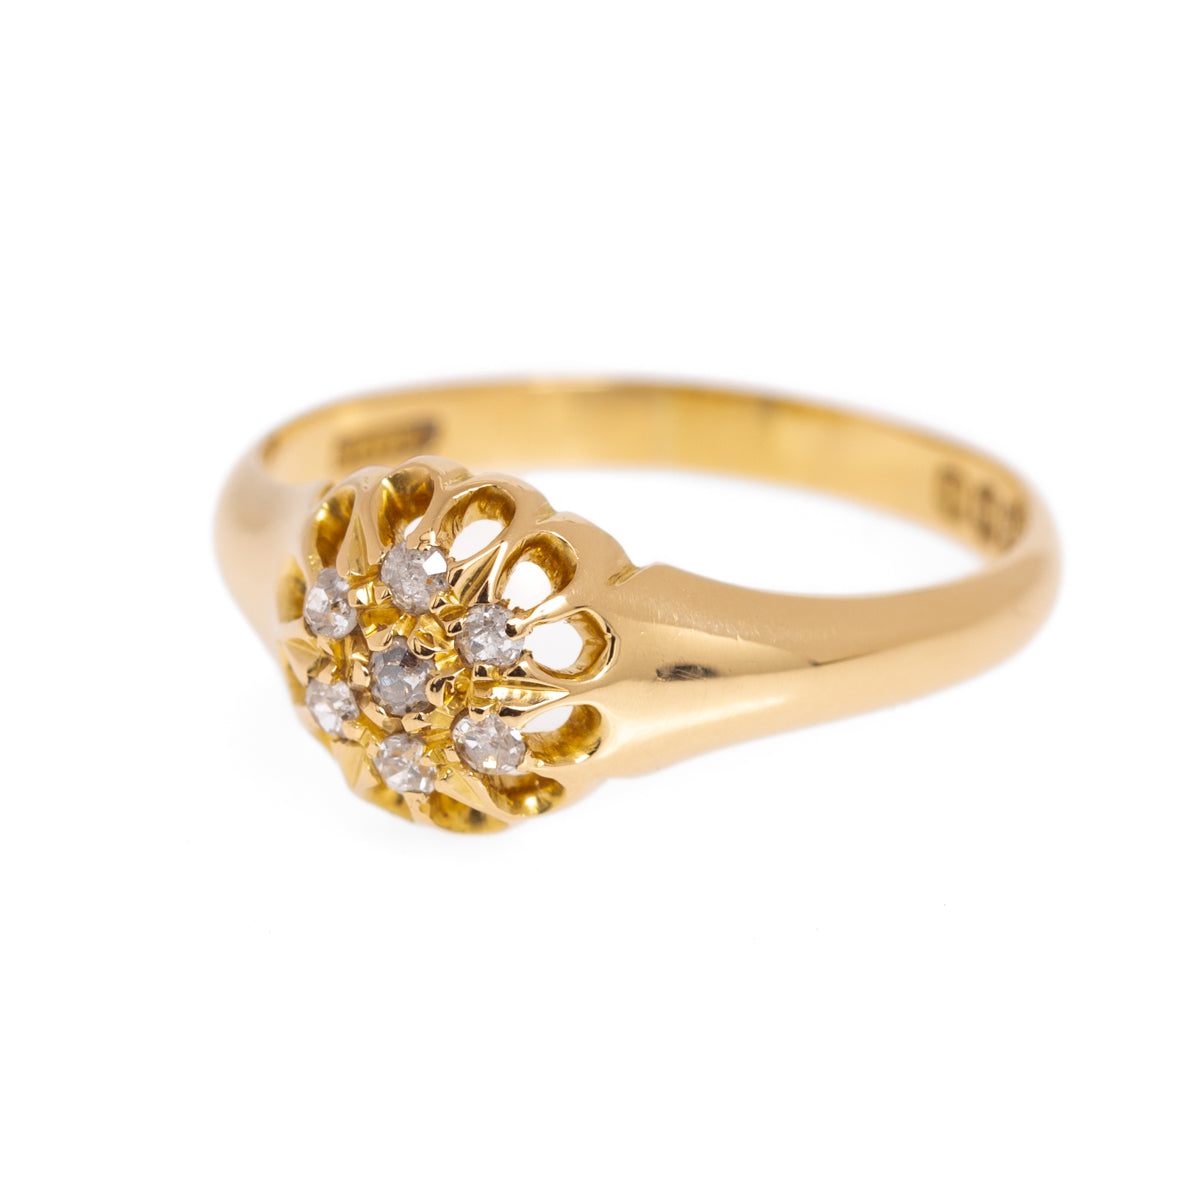 Antique 18ct Gold & Diamond Daisy Cluster Ring Birmingham Hallmark 1918 UK Size O  (A1147)